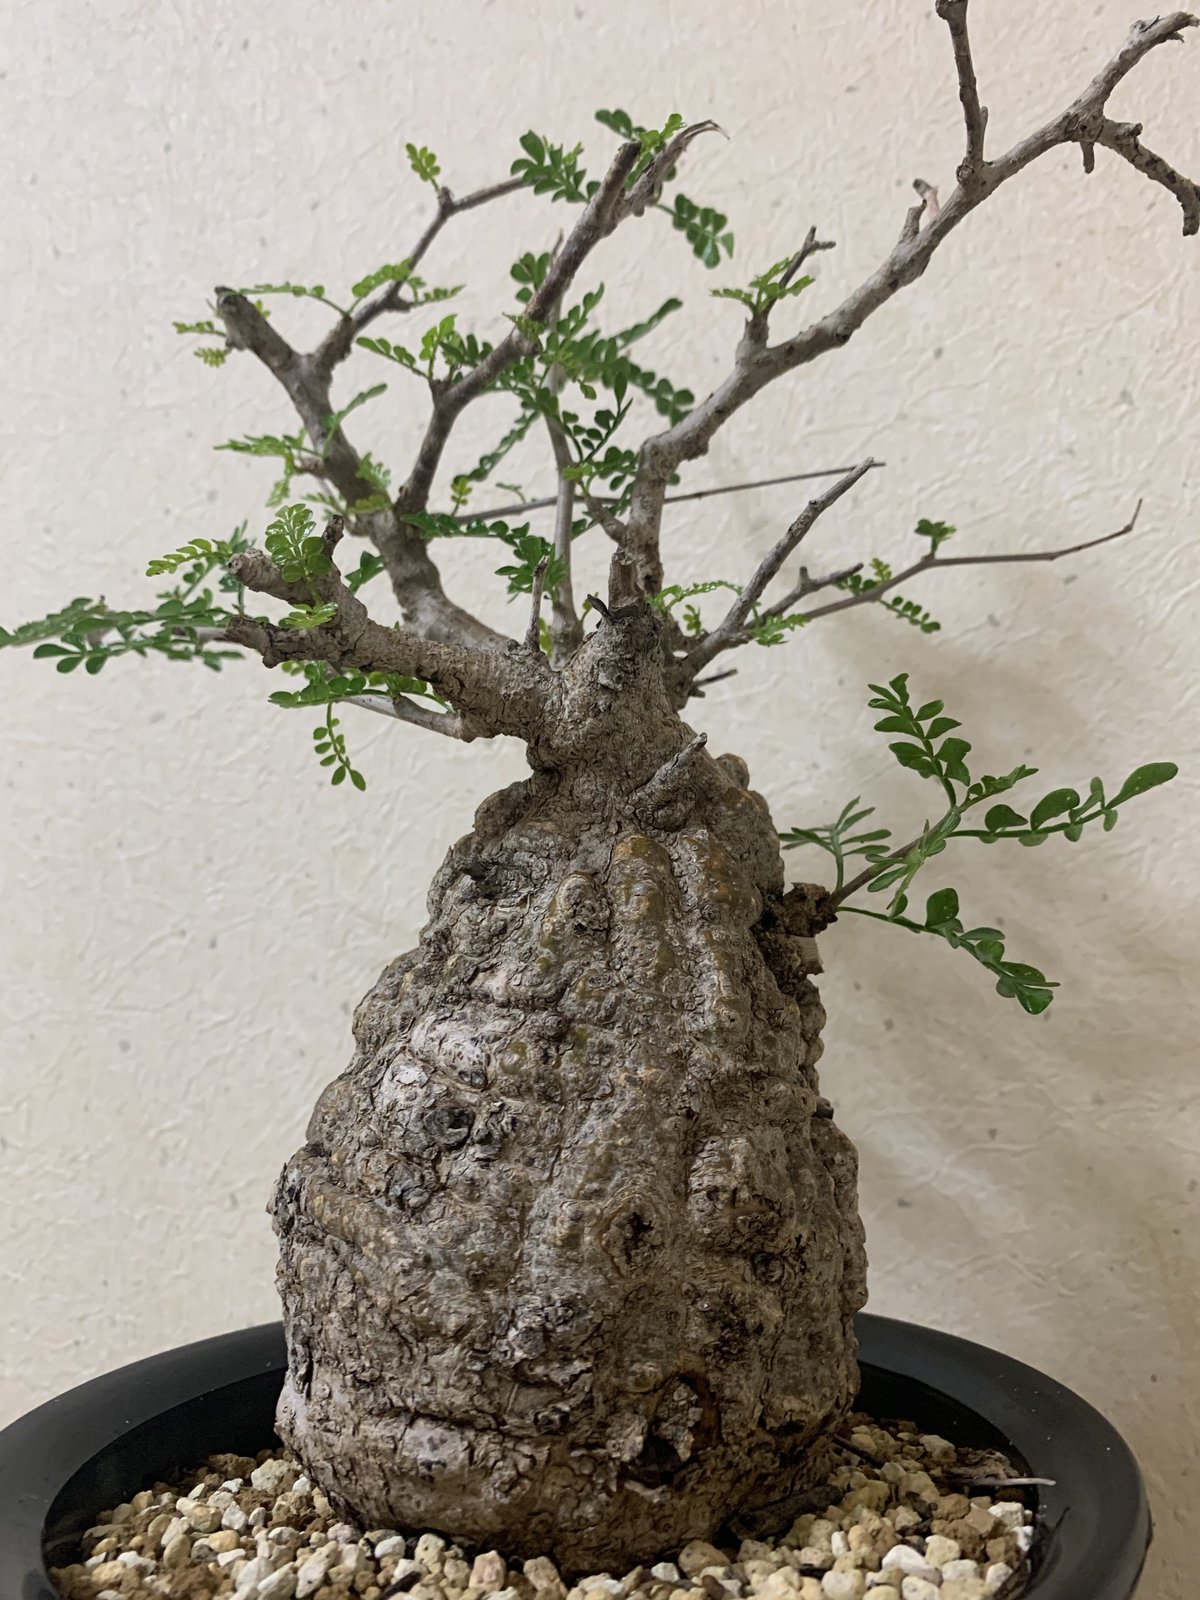 Pergia オペルクリカリアパキプス 原種 コーデックス 塊根植物